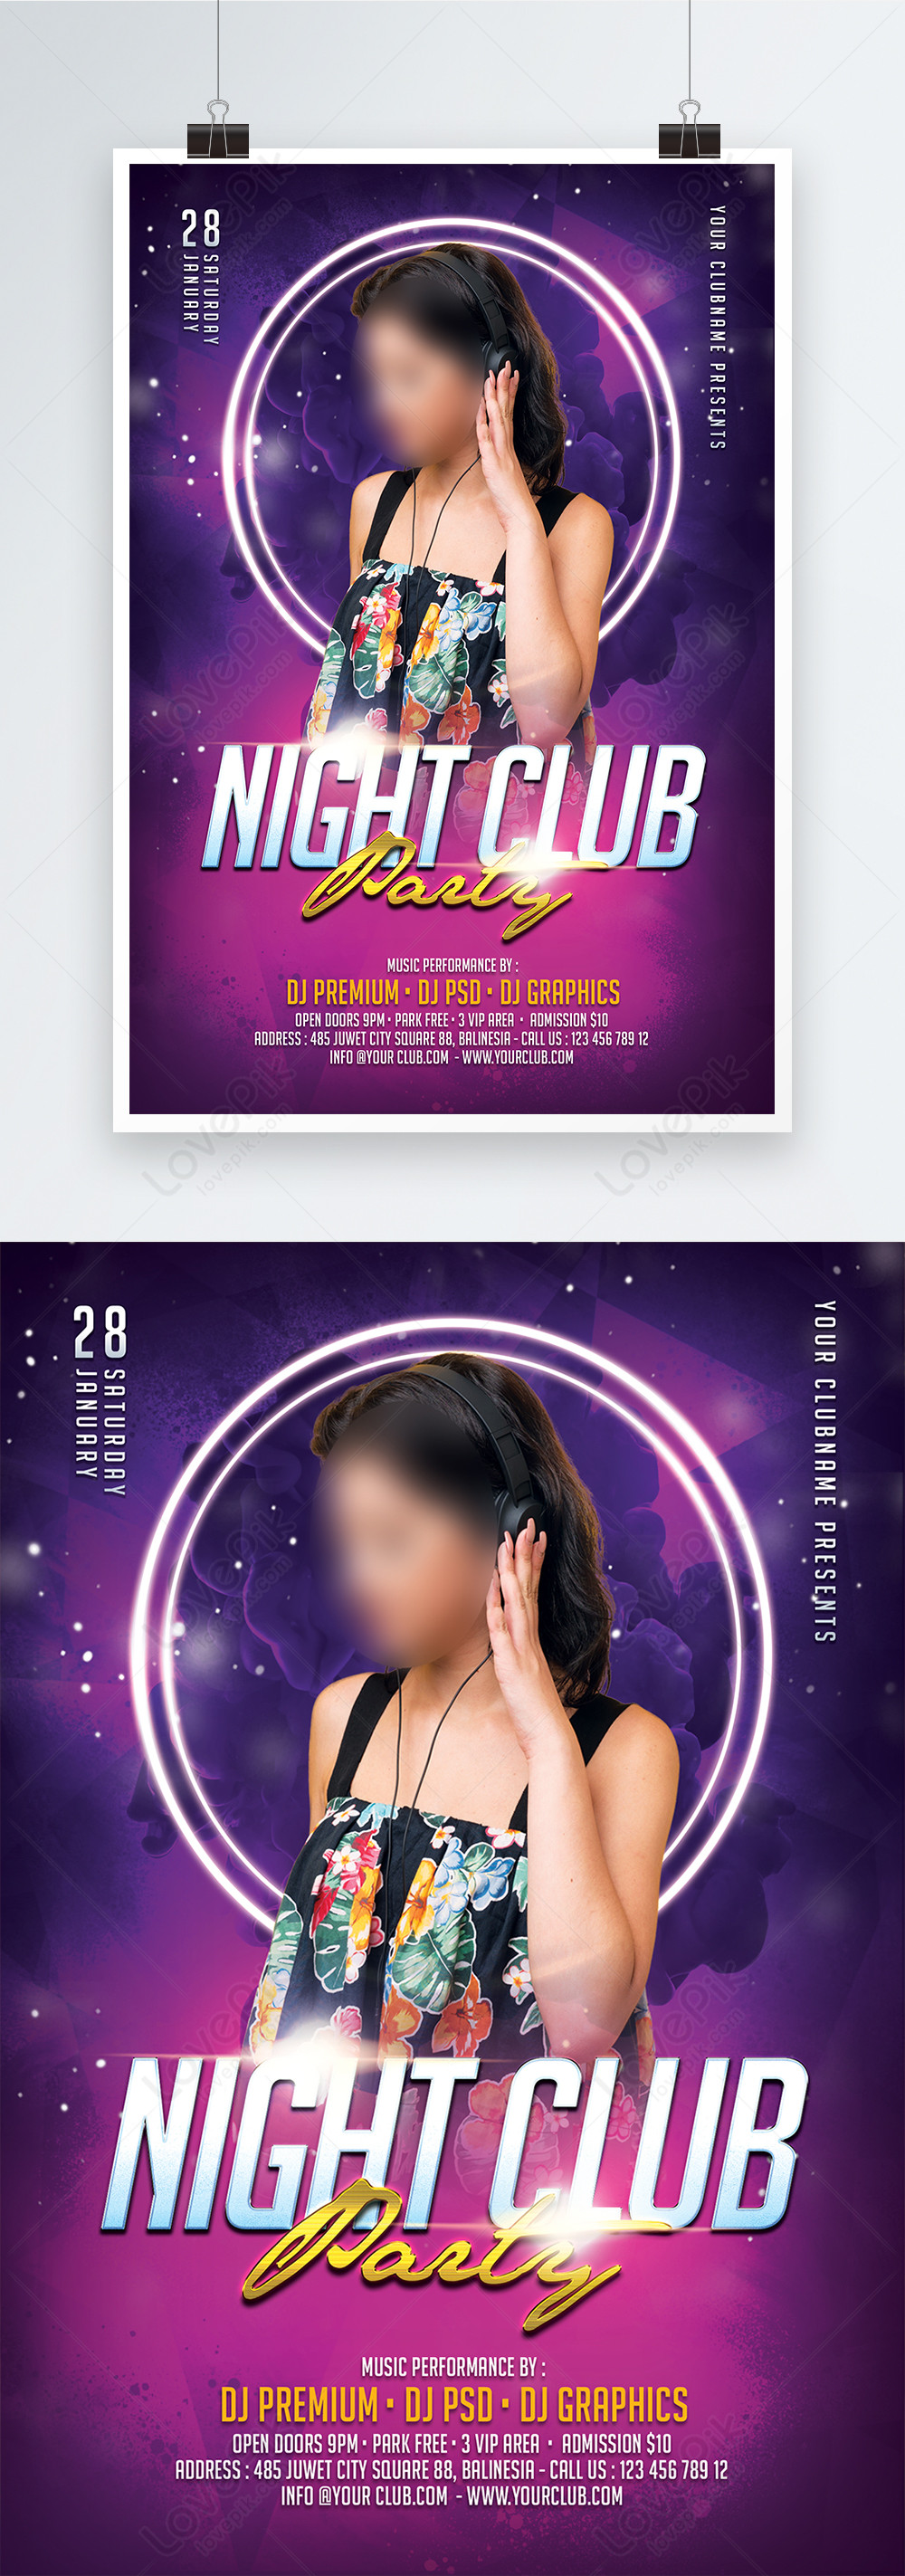 nightclub flyer templates free download